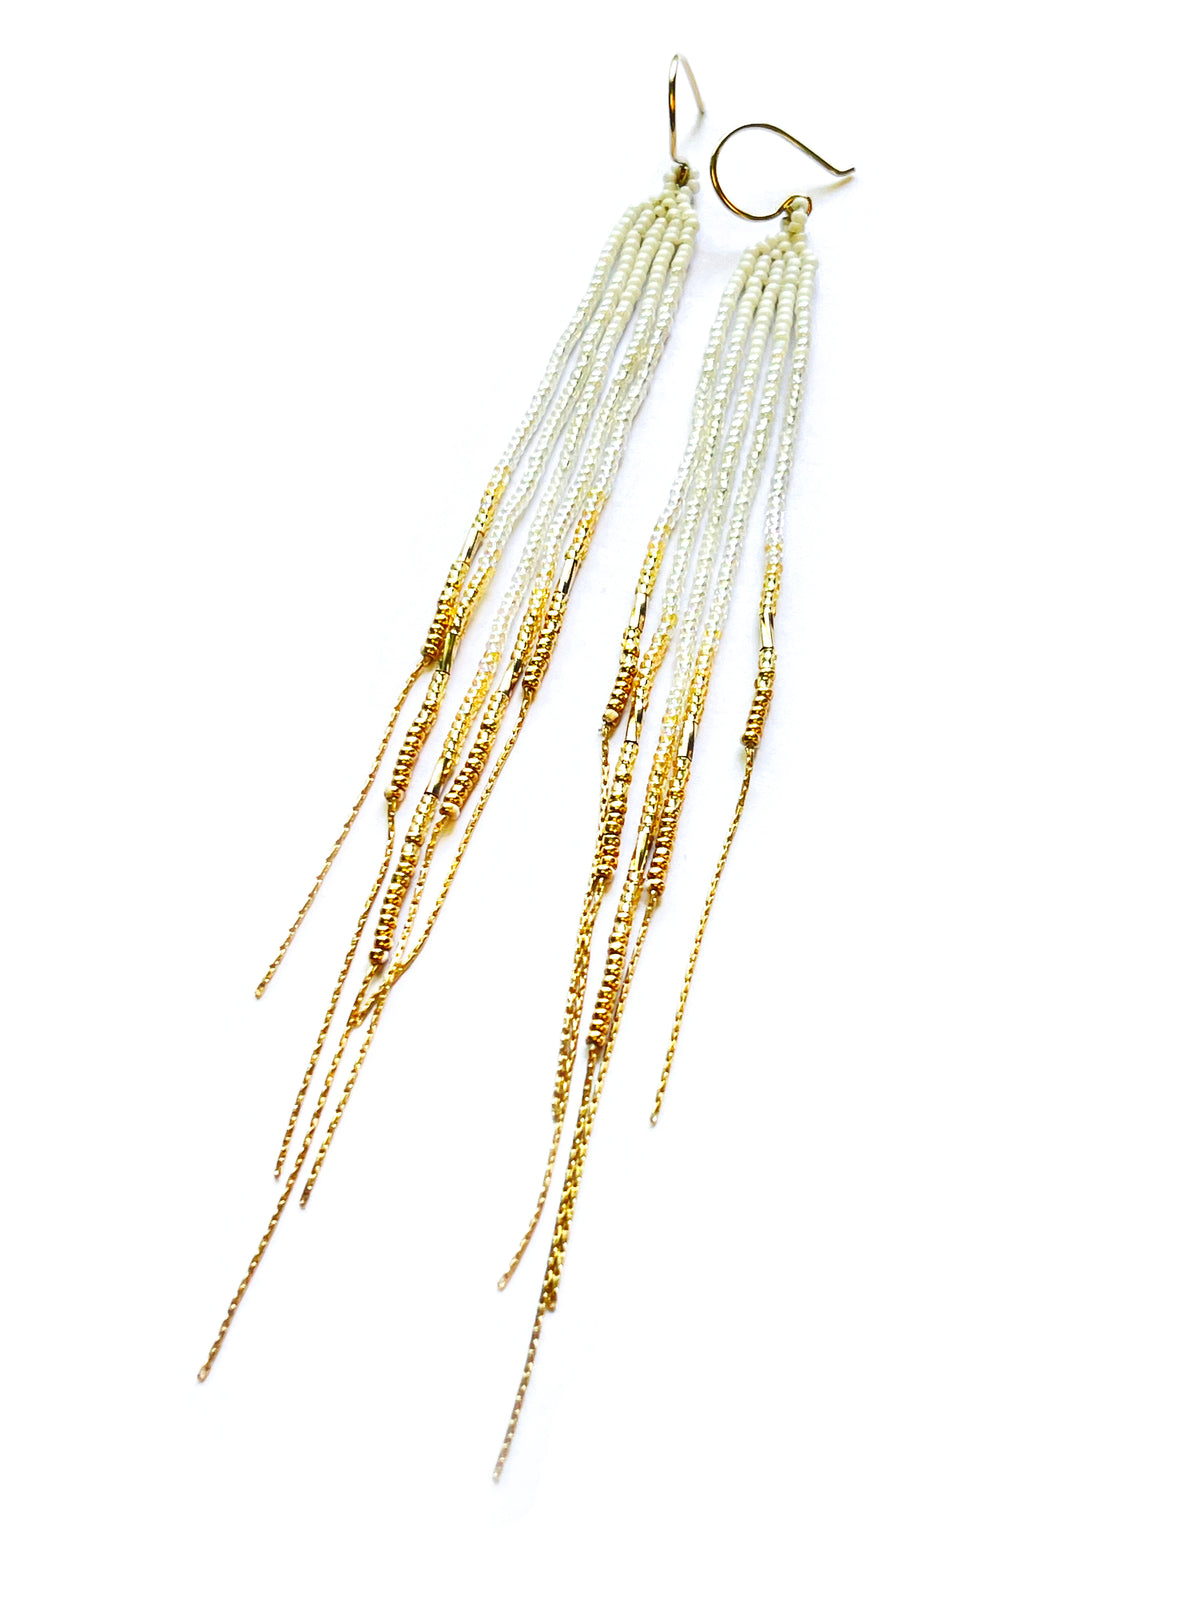 Pop-Up Mākeke - Maui Swan Designs - 6” Glass beaded earrings with 14k Gold filled beads &amp; chain fringe - White